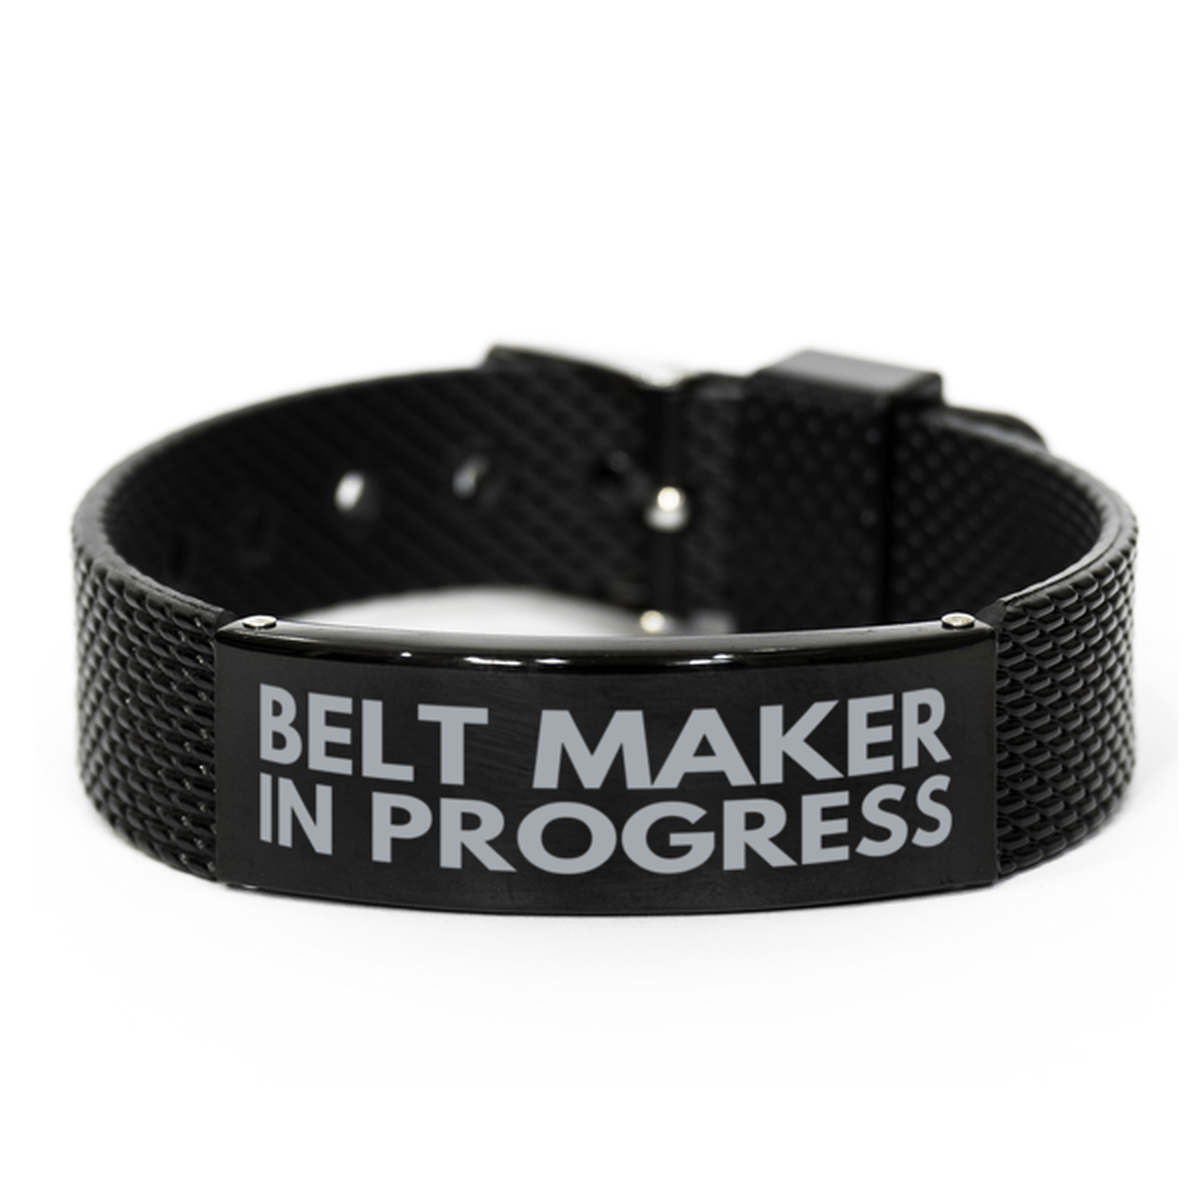 Inspirational Belt Maker Black Shark Mesh Bracelet, Belt Maker In Progress, Best Graduation Gifts for Students